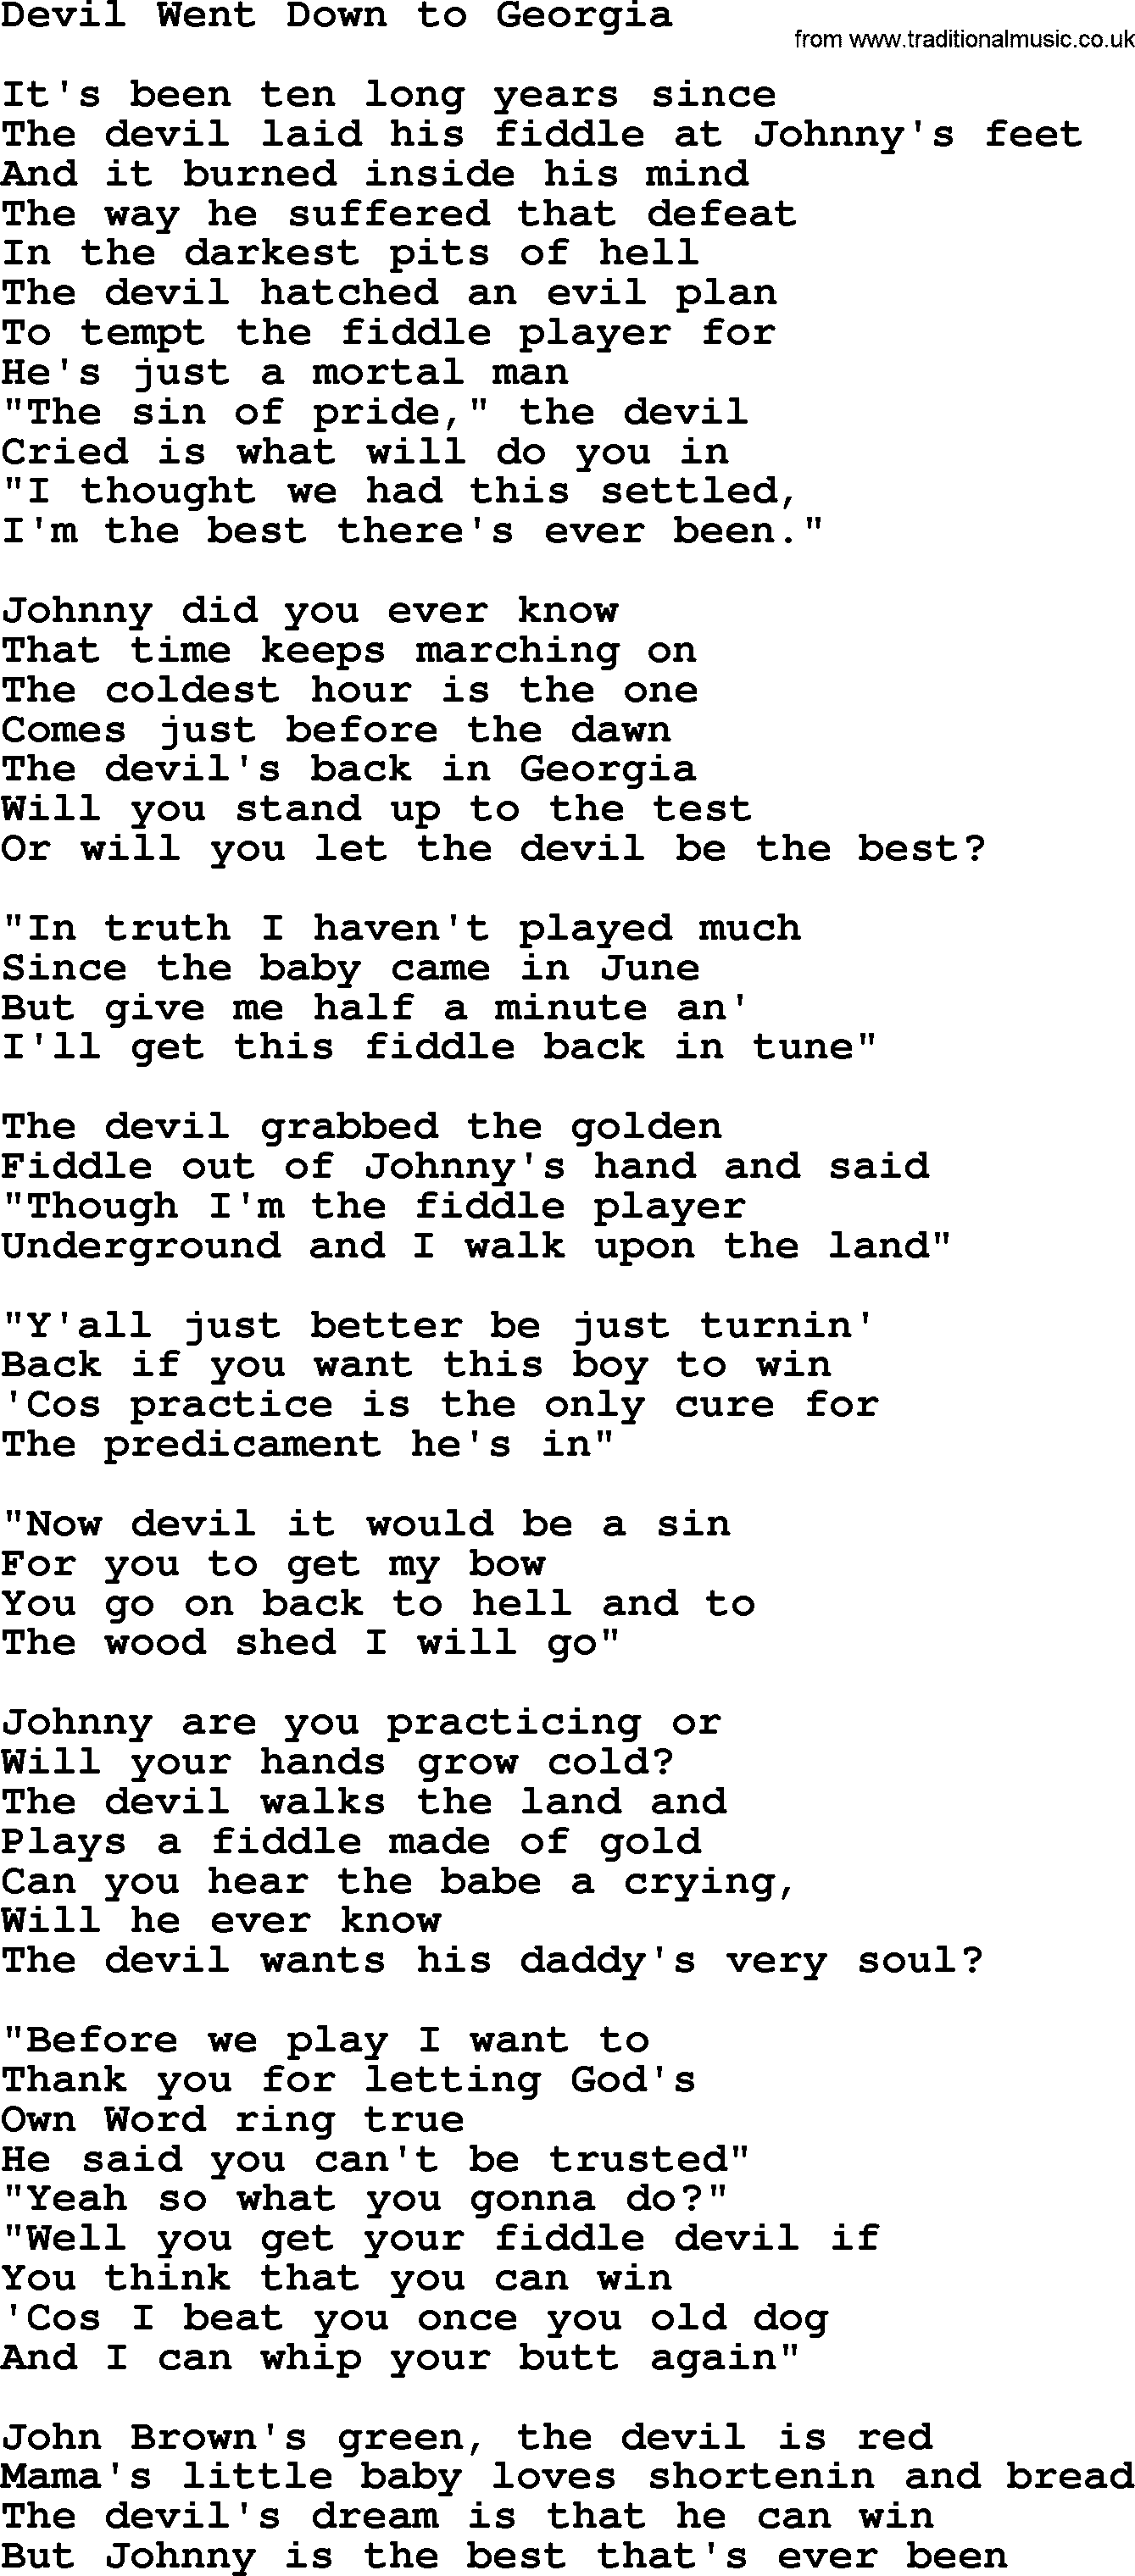 Johnny Cash song Devil Went Down To Georgia.txt lyrics